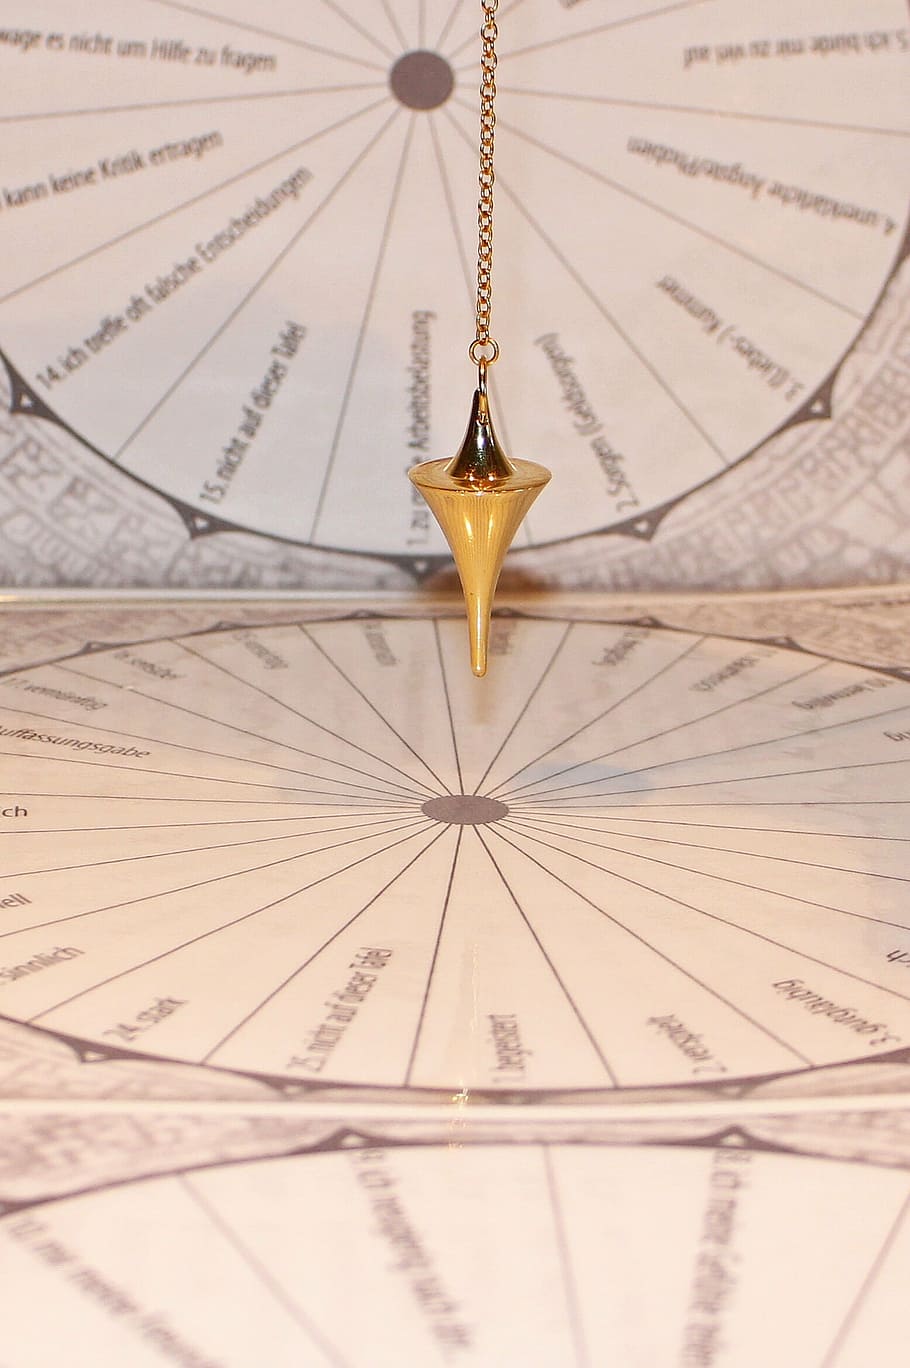 pendulum, pointing, wheel, pendulum boards, board, template, vibrations, vibration, pendulum vibrations, commute